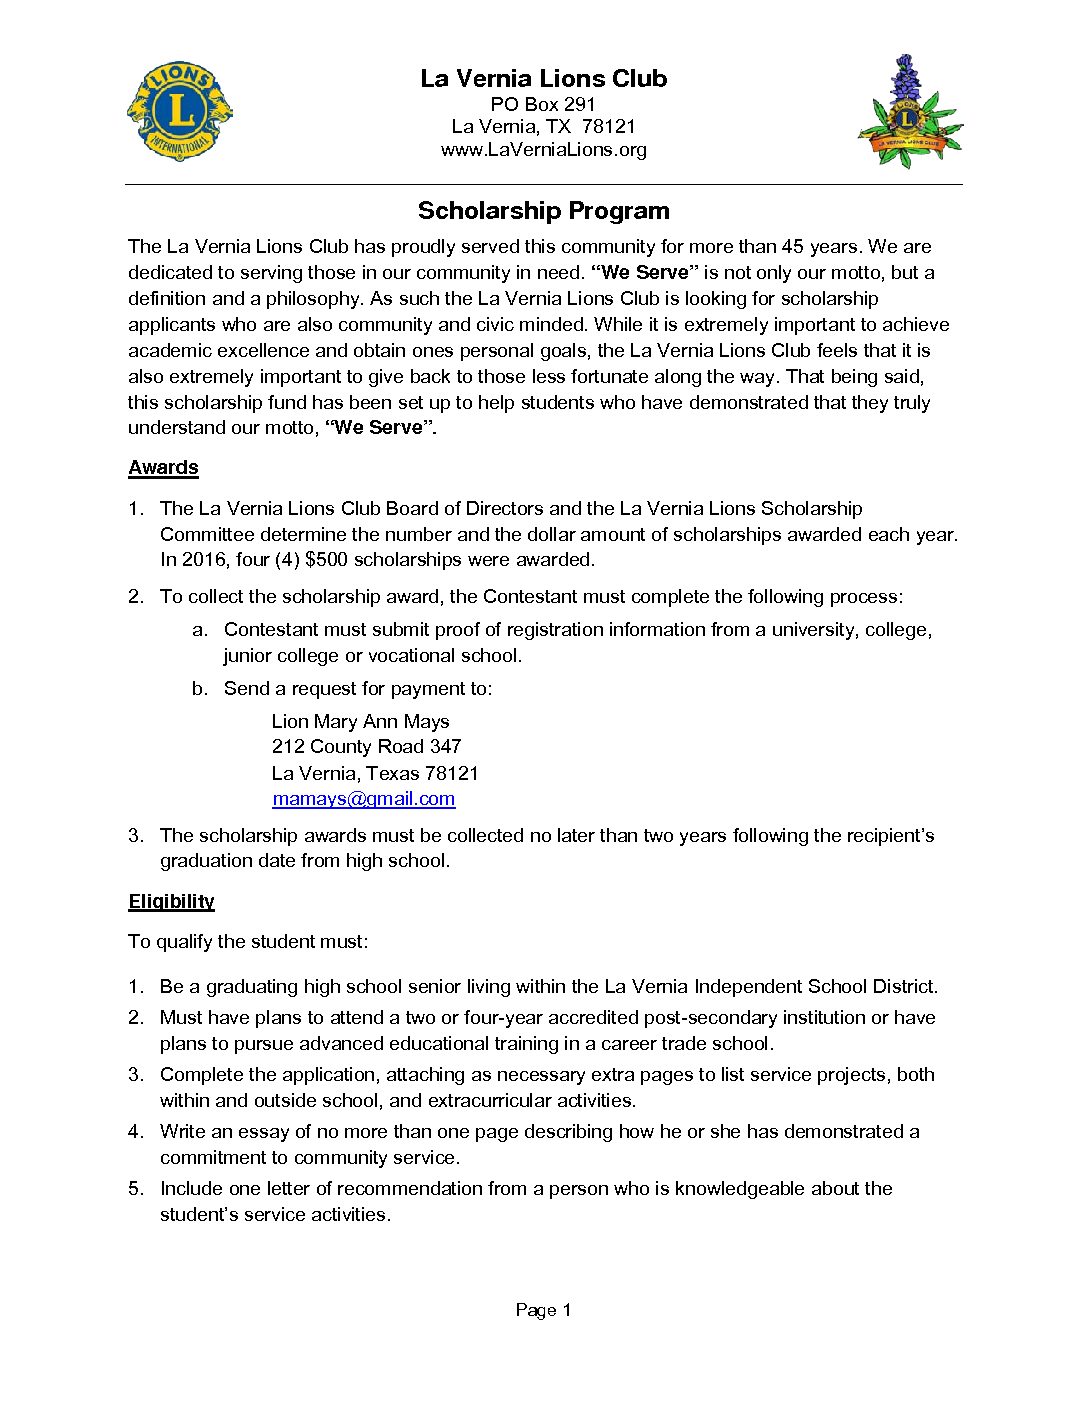 community service scholarship essay